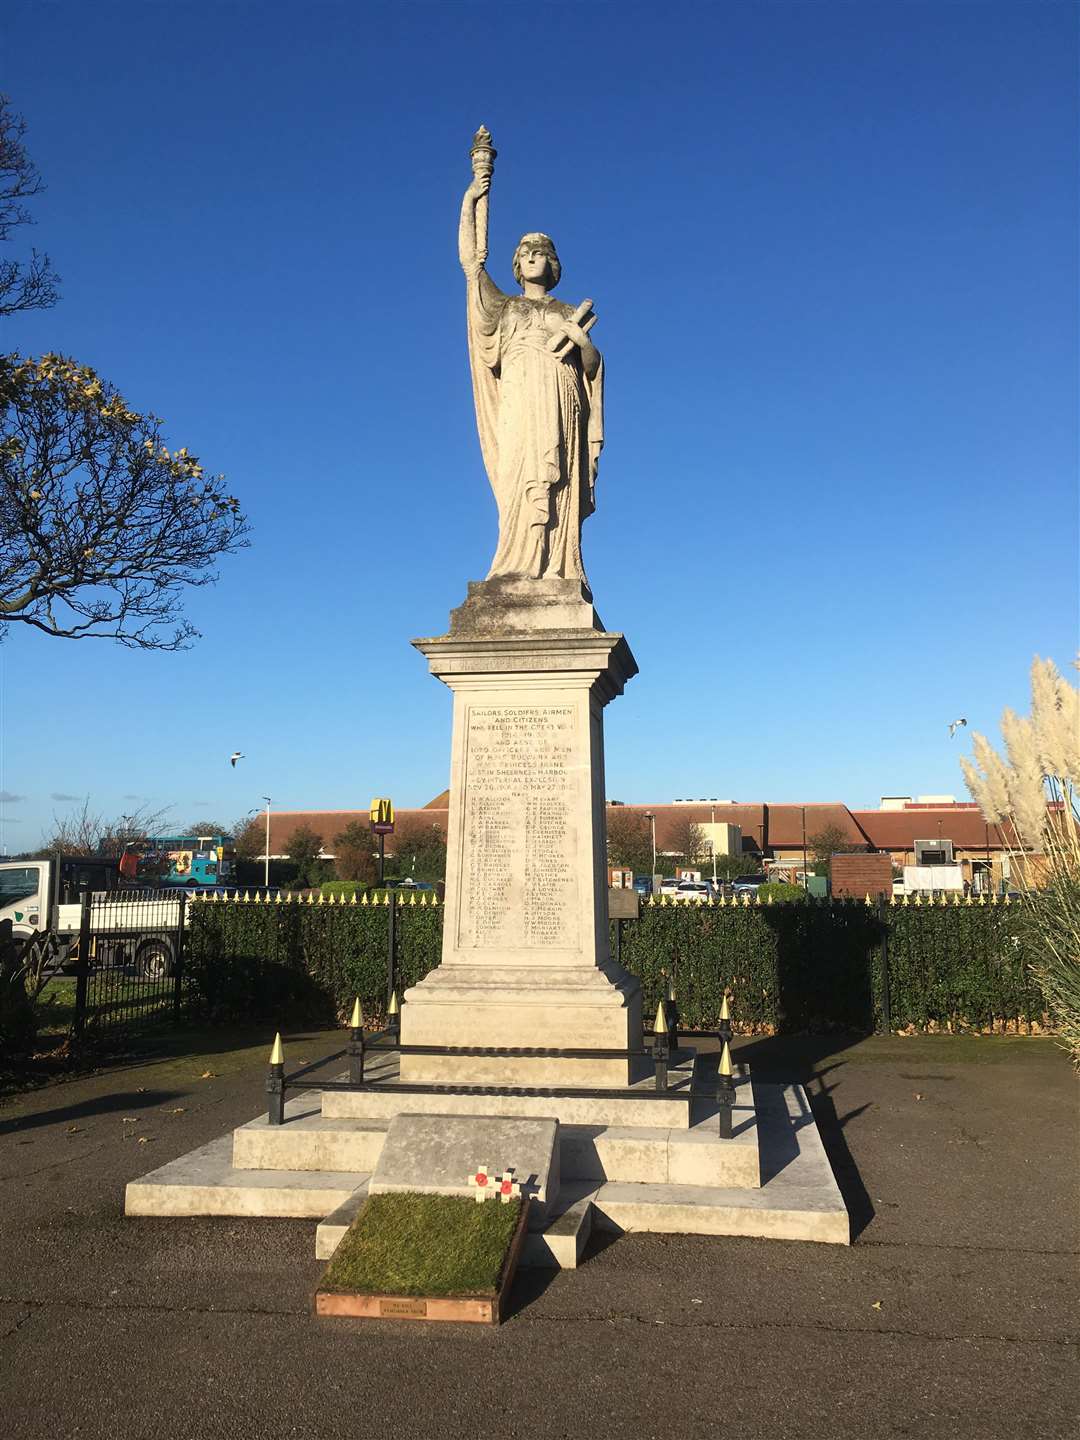 Sheerness war memorial was strangely quiet on Sunday